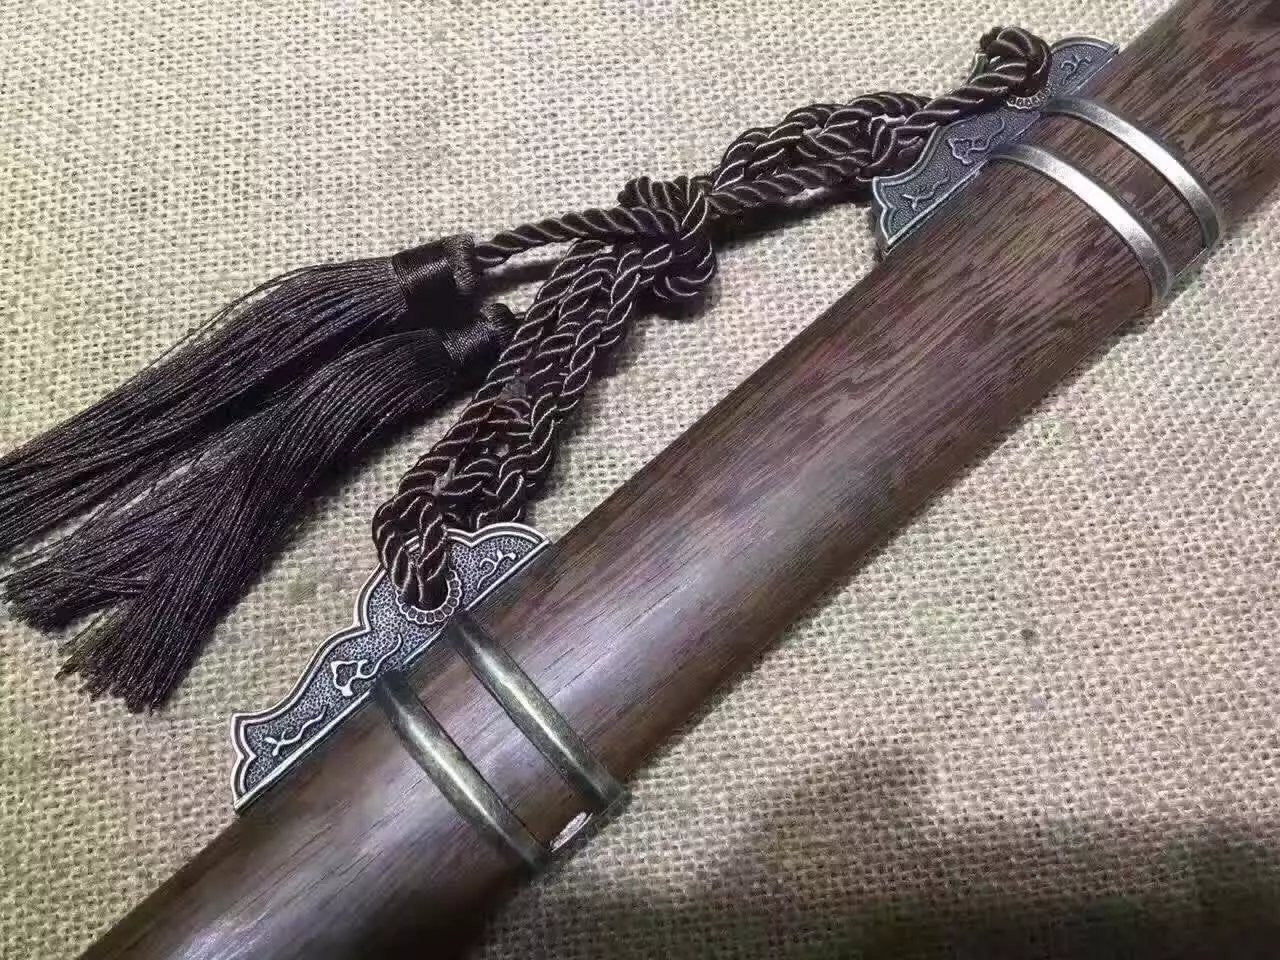 Tang dao,Handmade sword,Folding steel,Rosewood,Alloy,Full tang,Length 28" - Chinese sword shop